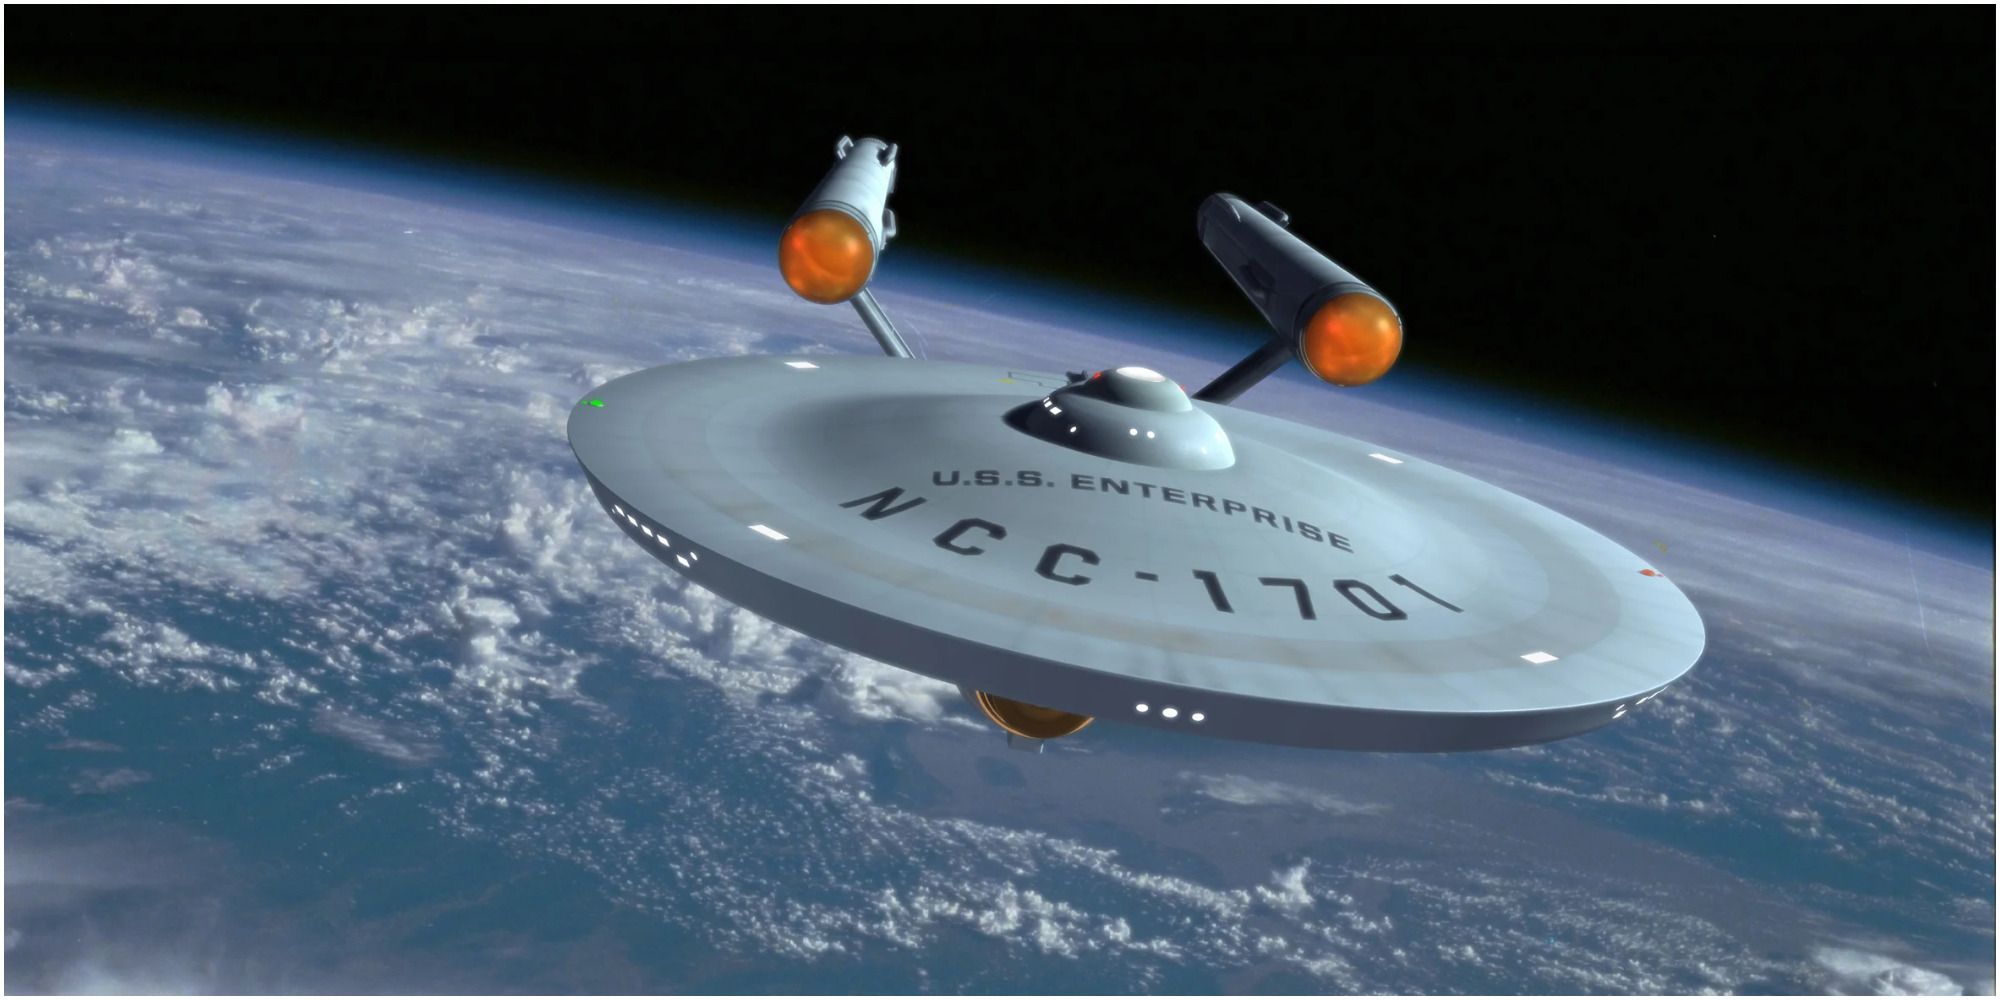 Enterpise from Star Trek The Original Series